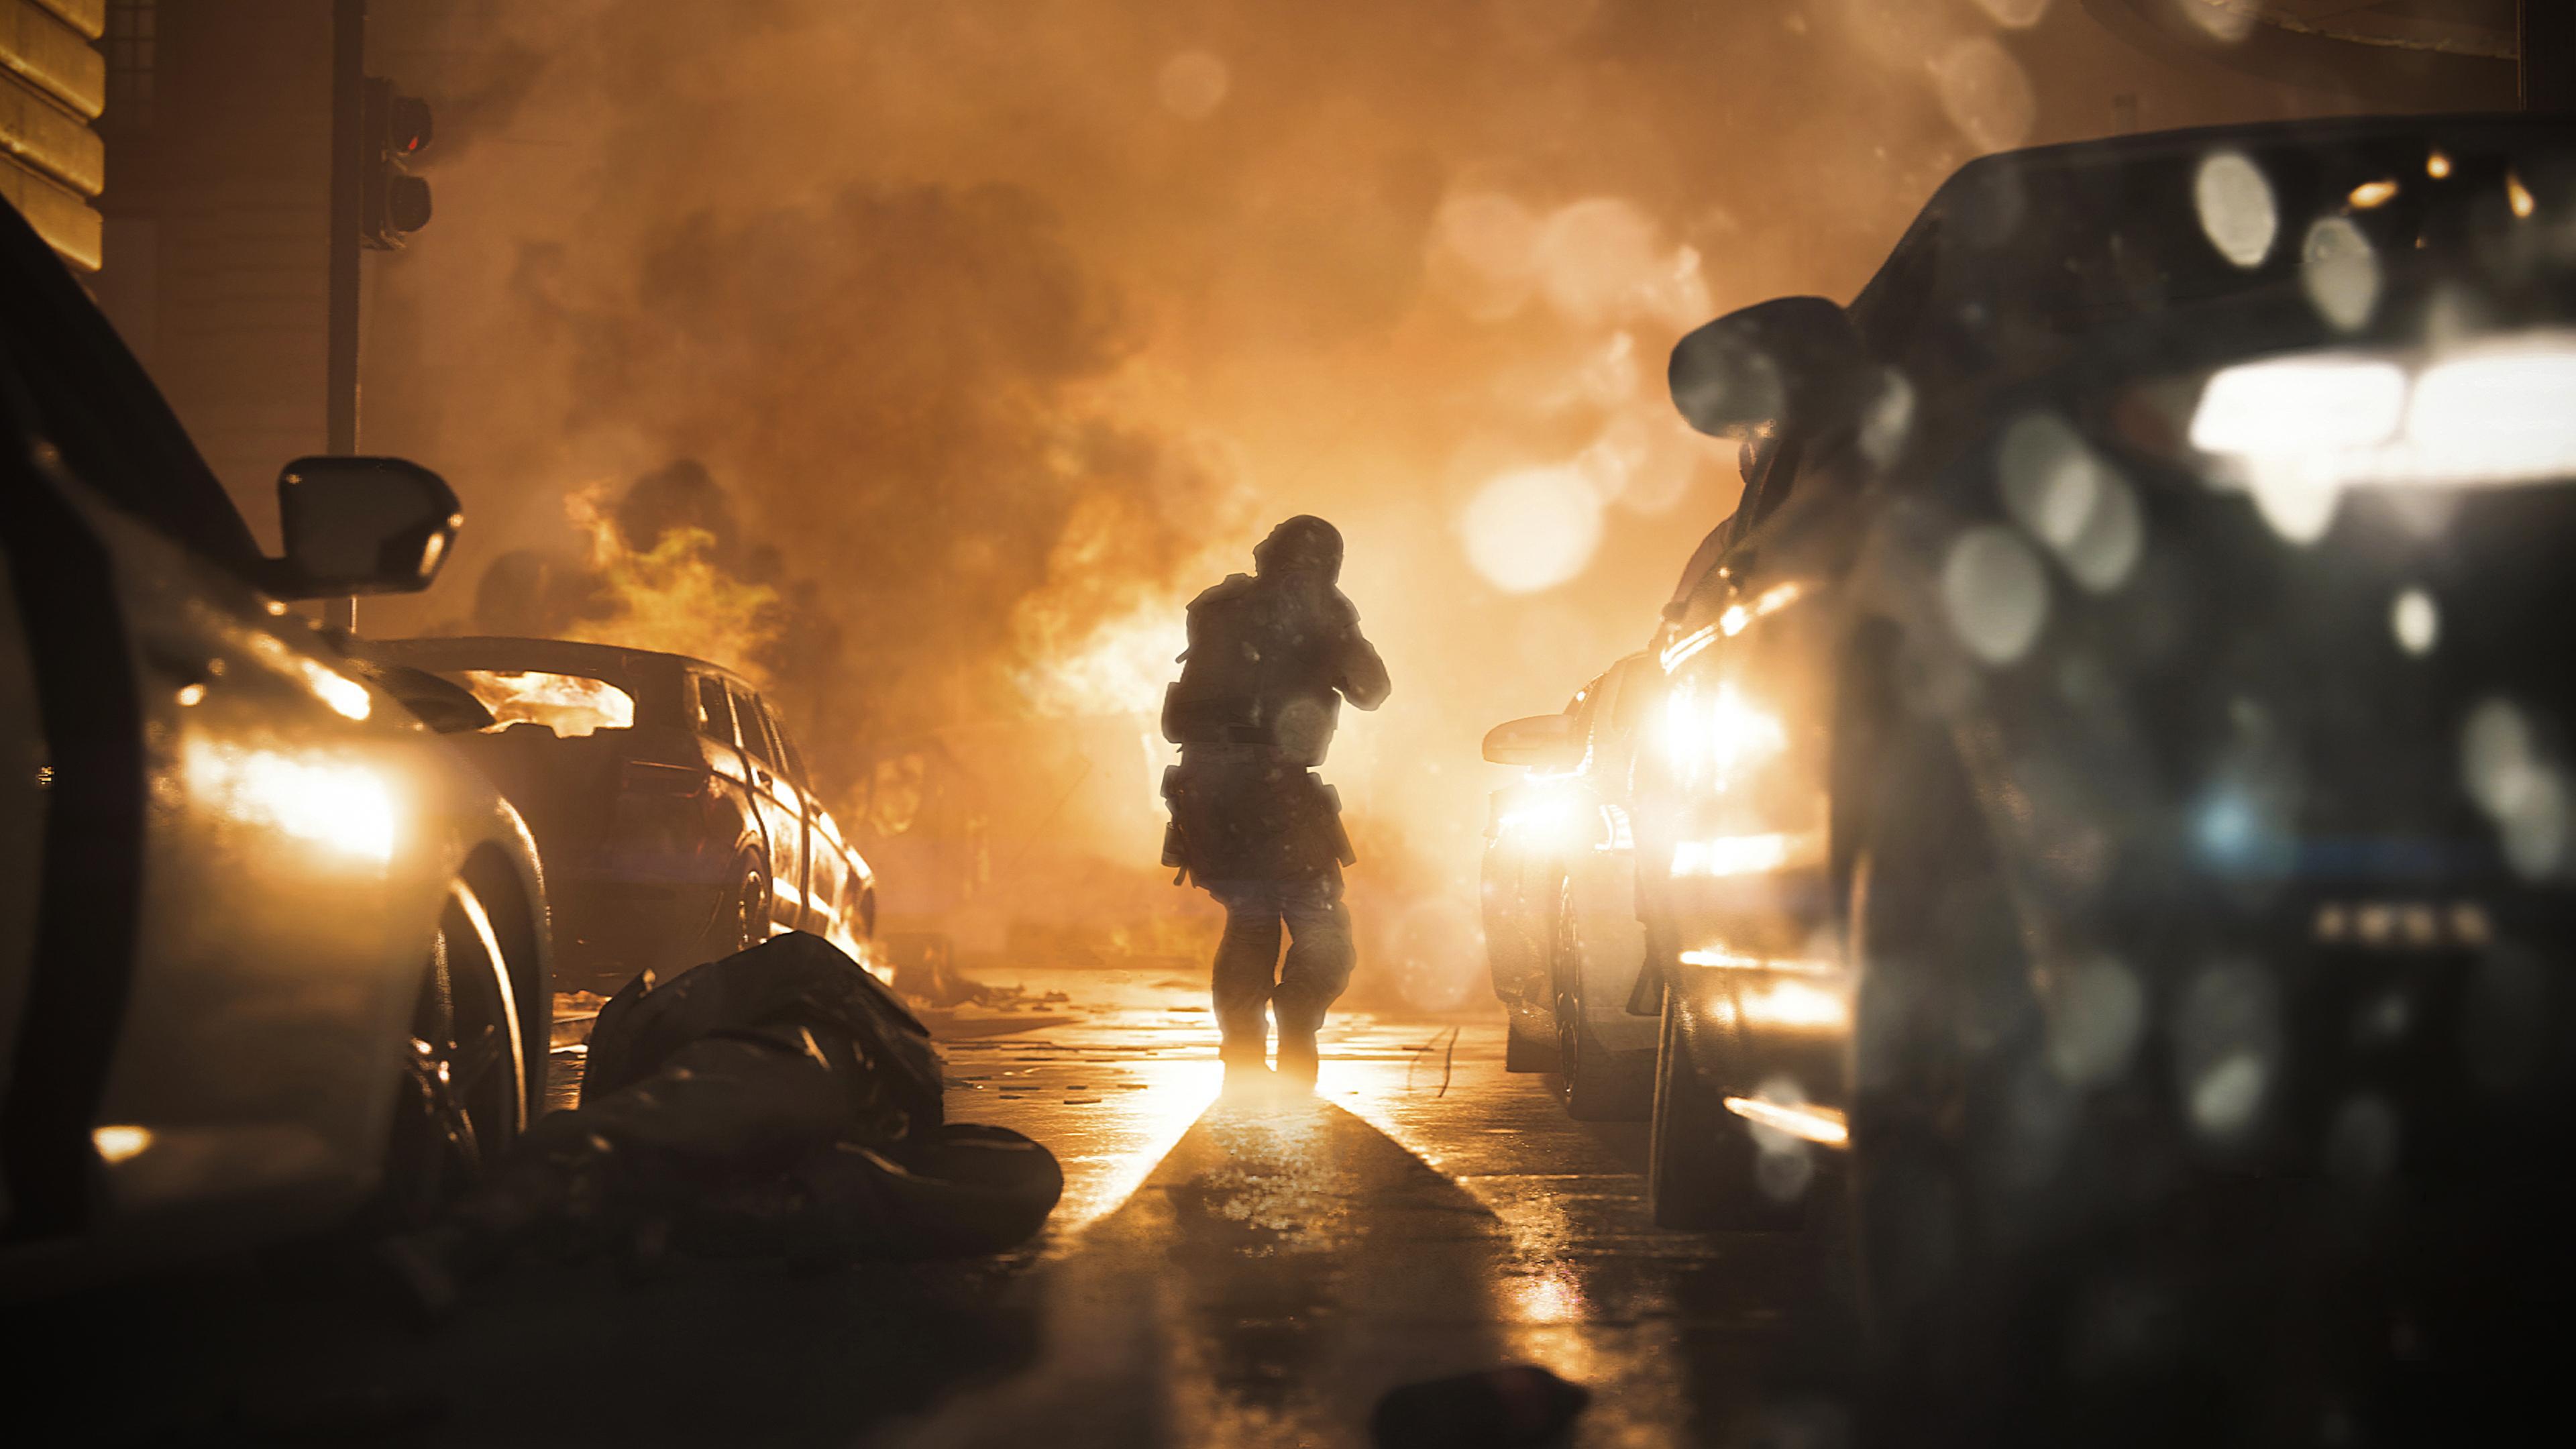 Call of Duty Modern Warfare 2019 Wallpaper, HD Games 4K Wallpapers